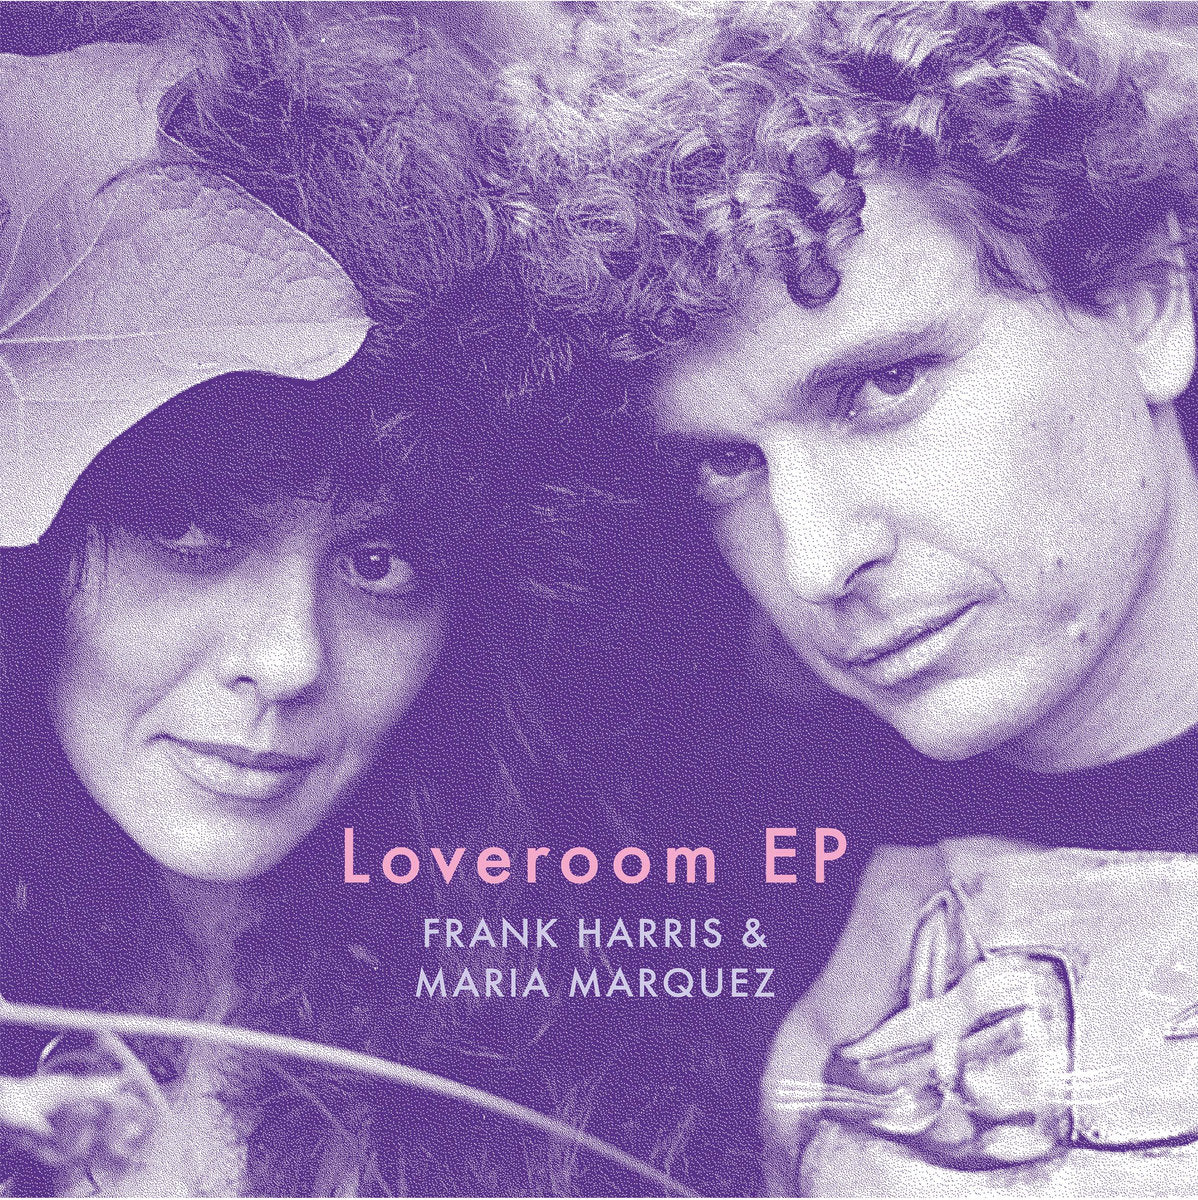 Frank Harris & Maria Marquez – Loveroom EP